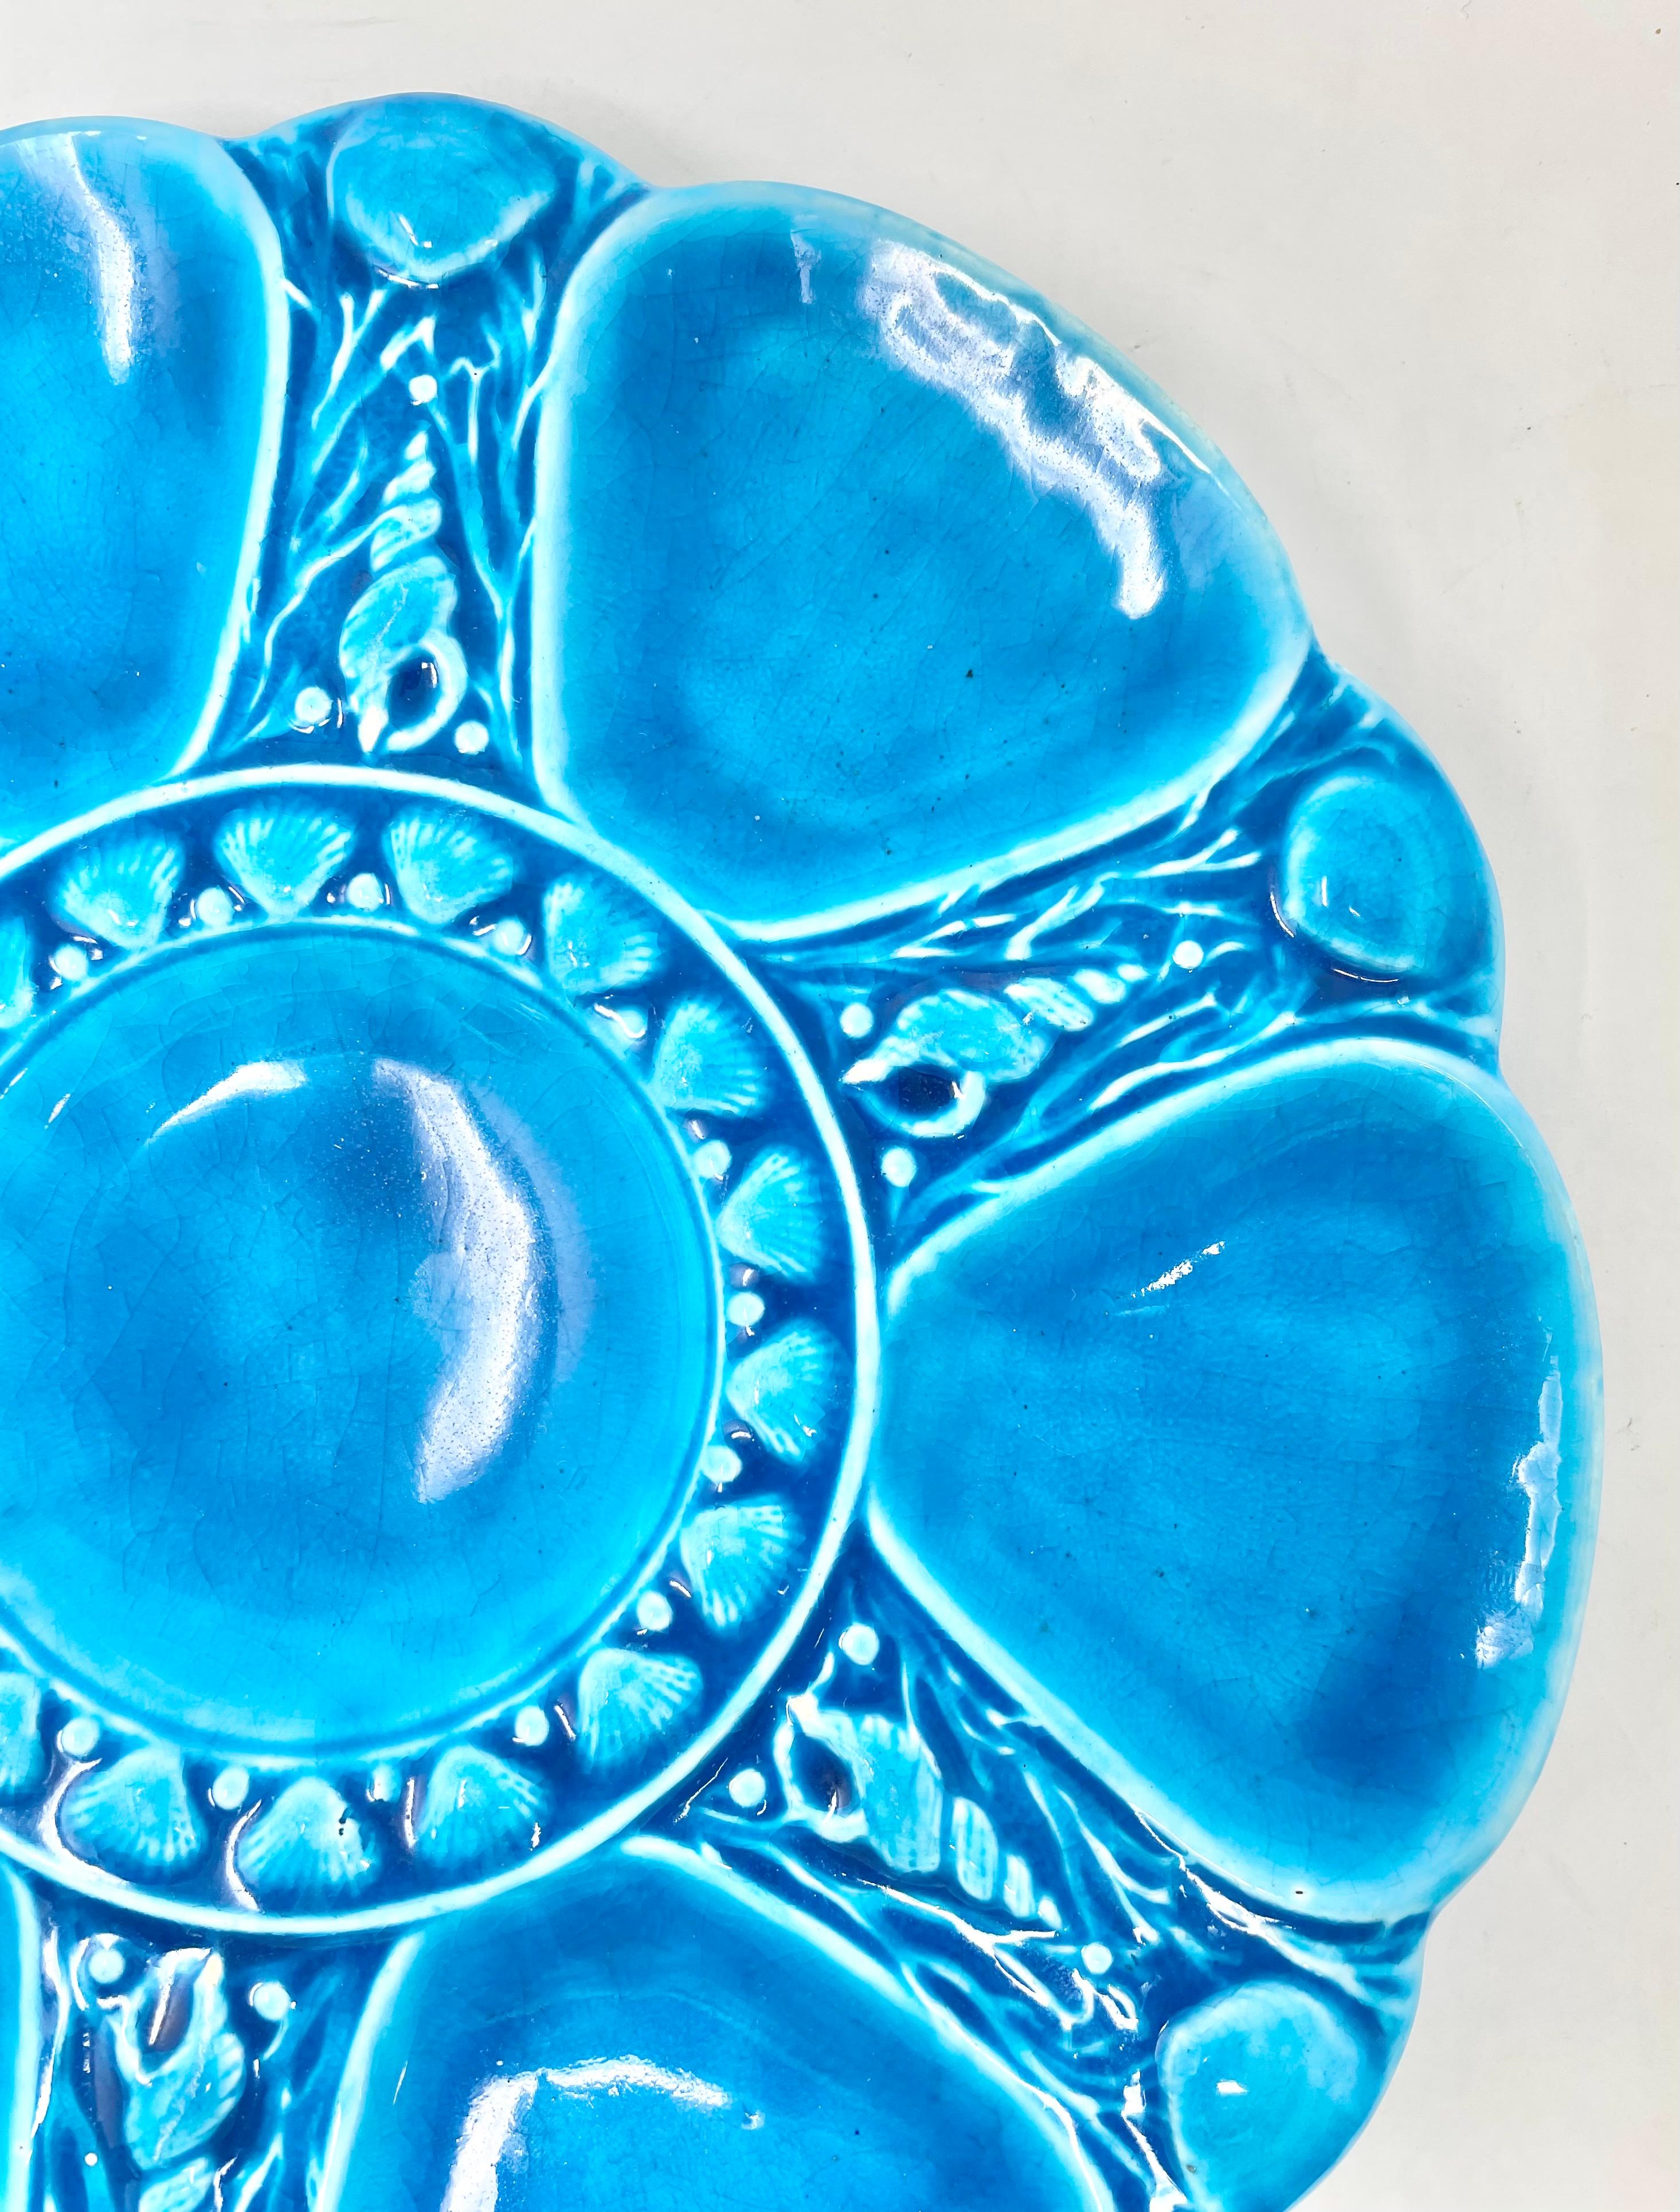 Rare Antique English Minton Majolica Turquoise Glazed Porcelain Oyster plate, Circa 1865.
Rare Chinoiserie style turquoise blue glaze.